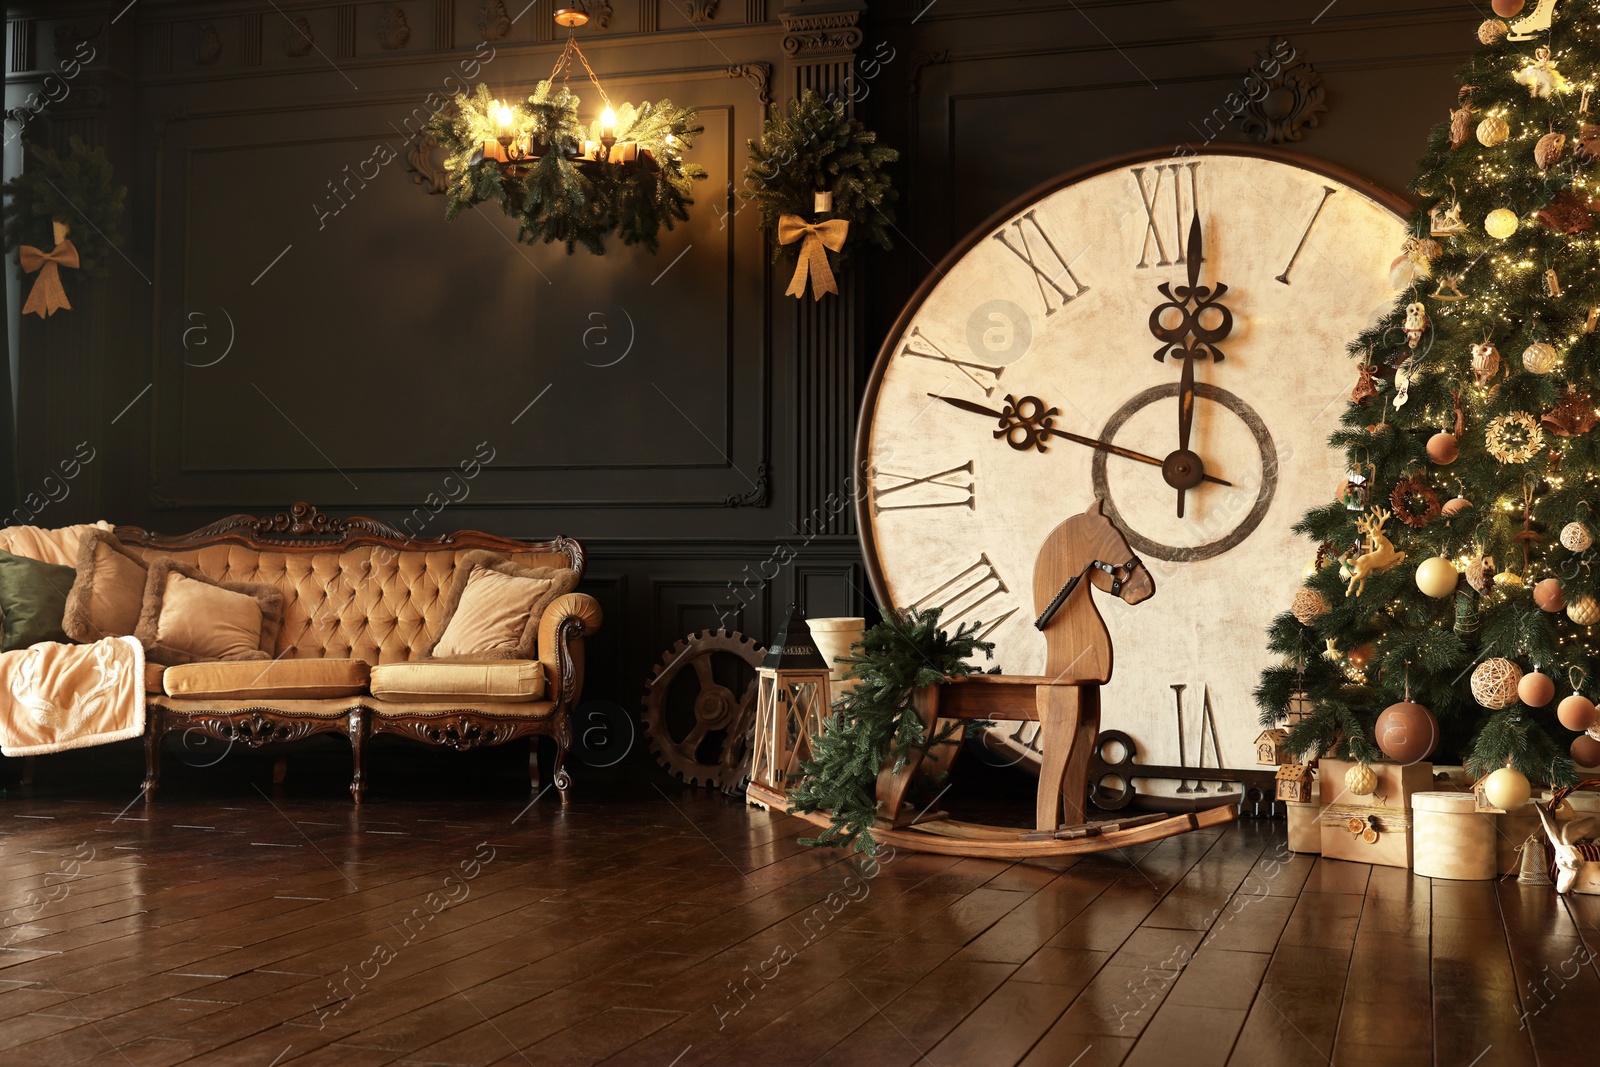 Photo of Stylish room interior with Christmas tree, big vintage clock and festive decor